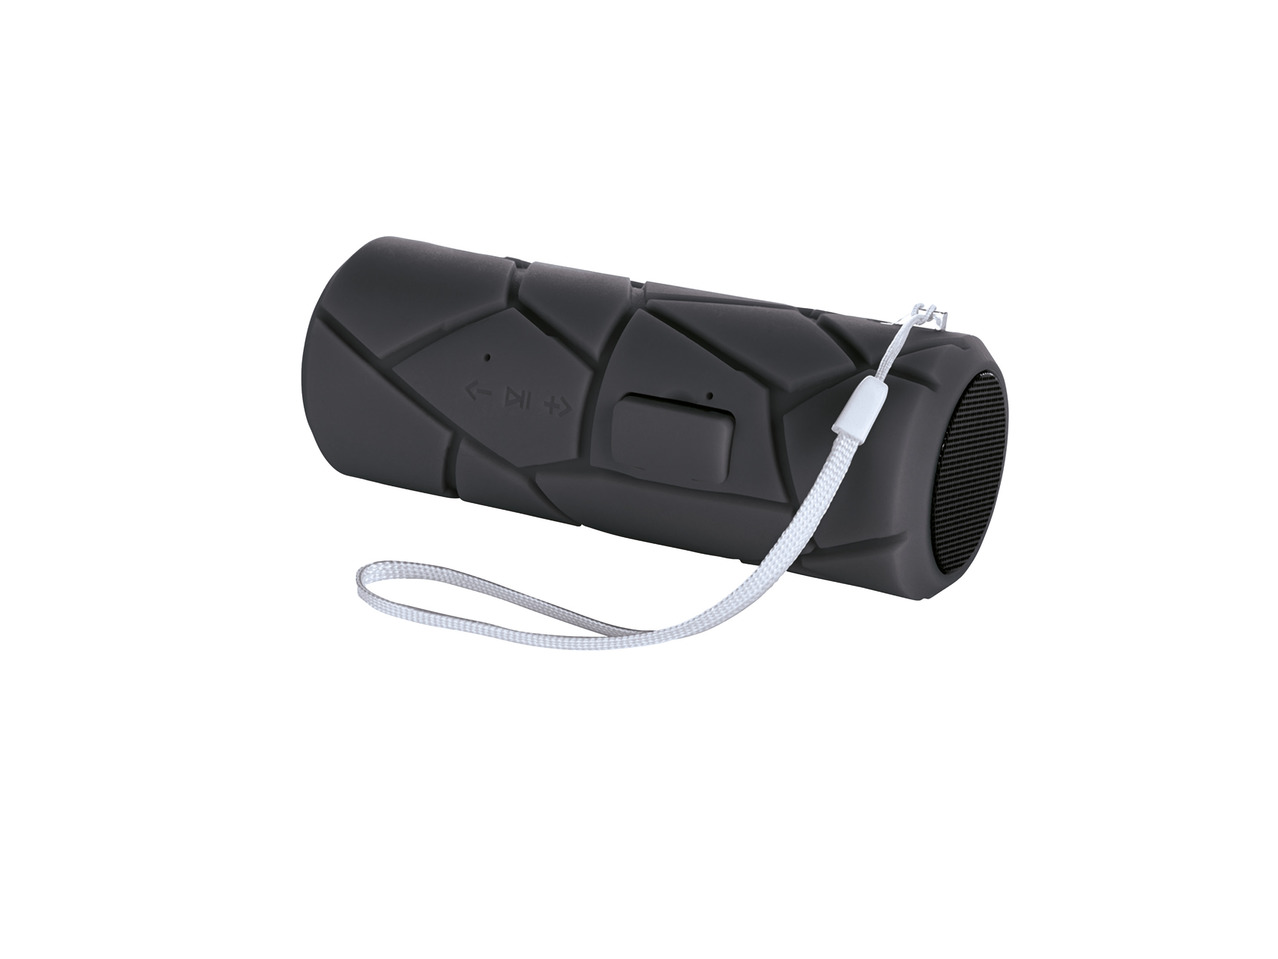 SILVERCREST(R) Bluetooth(R)-outdoorhøjtaler